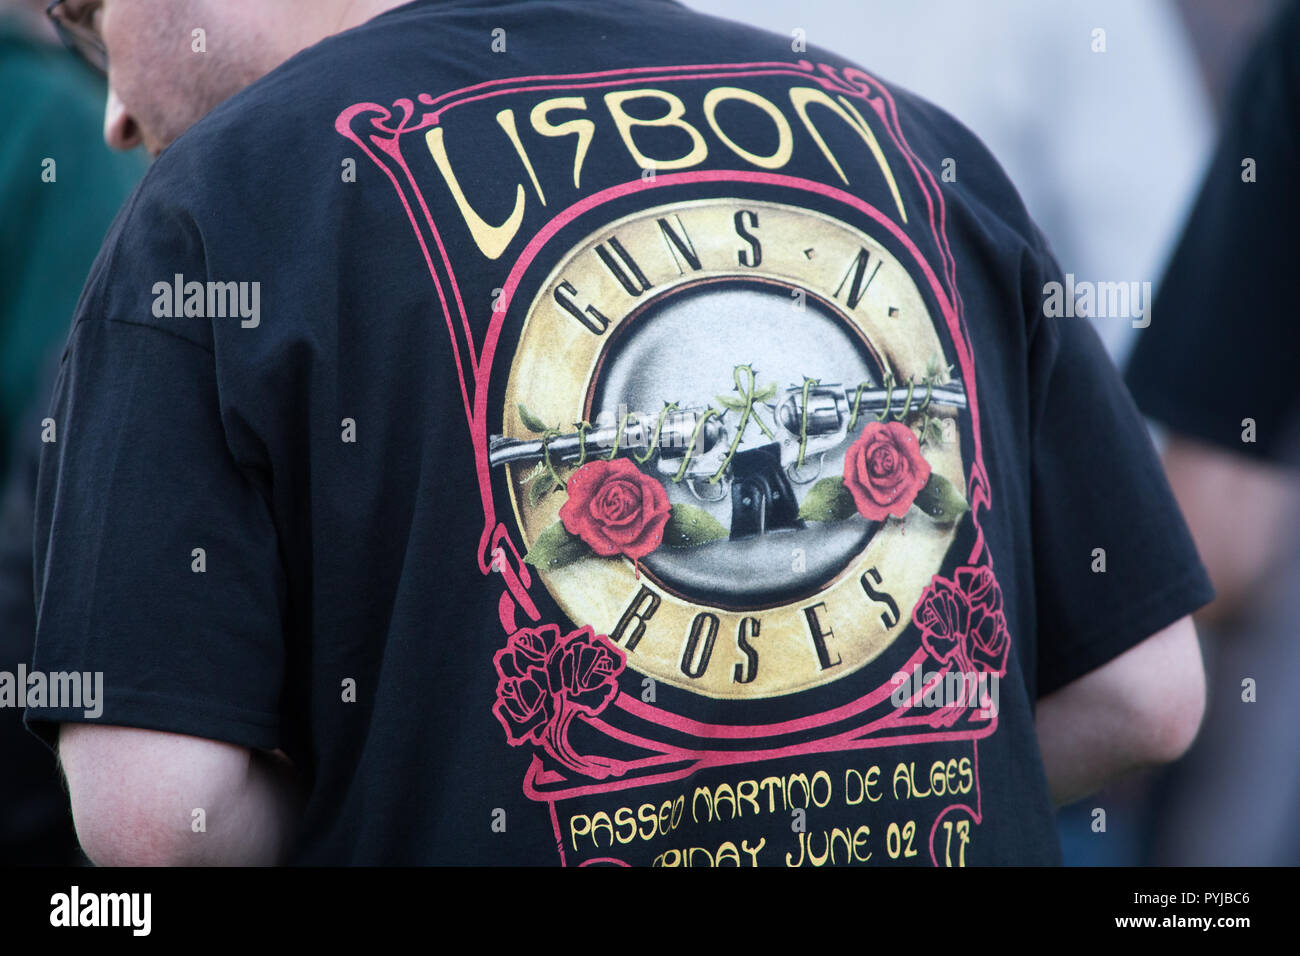 Guns n roses shirt hi-res stock photography and images - Alamy